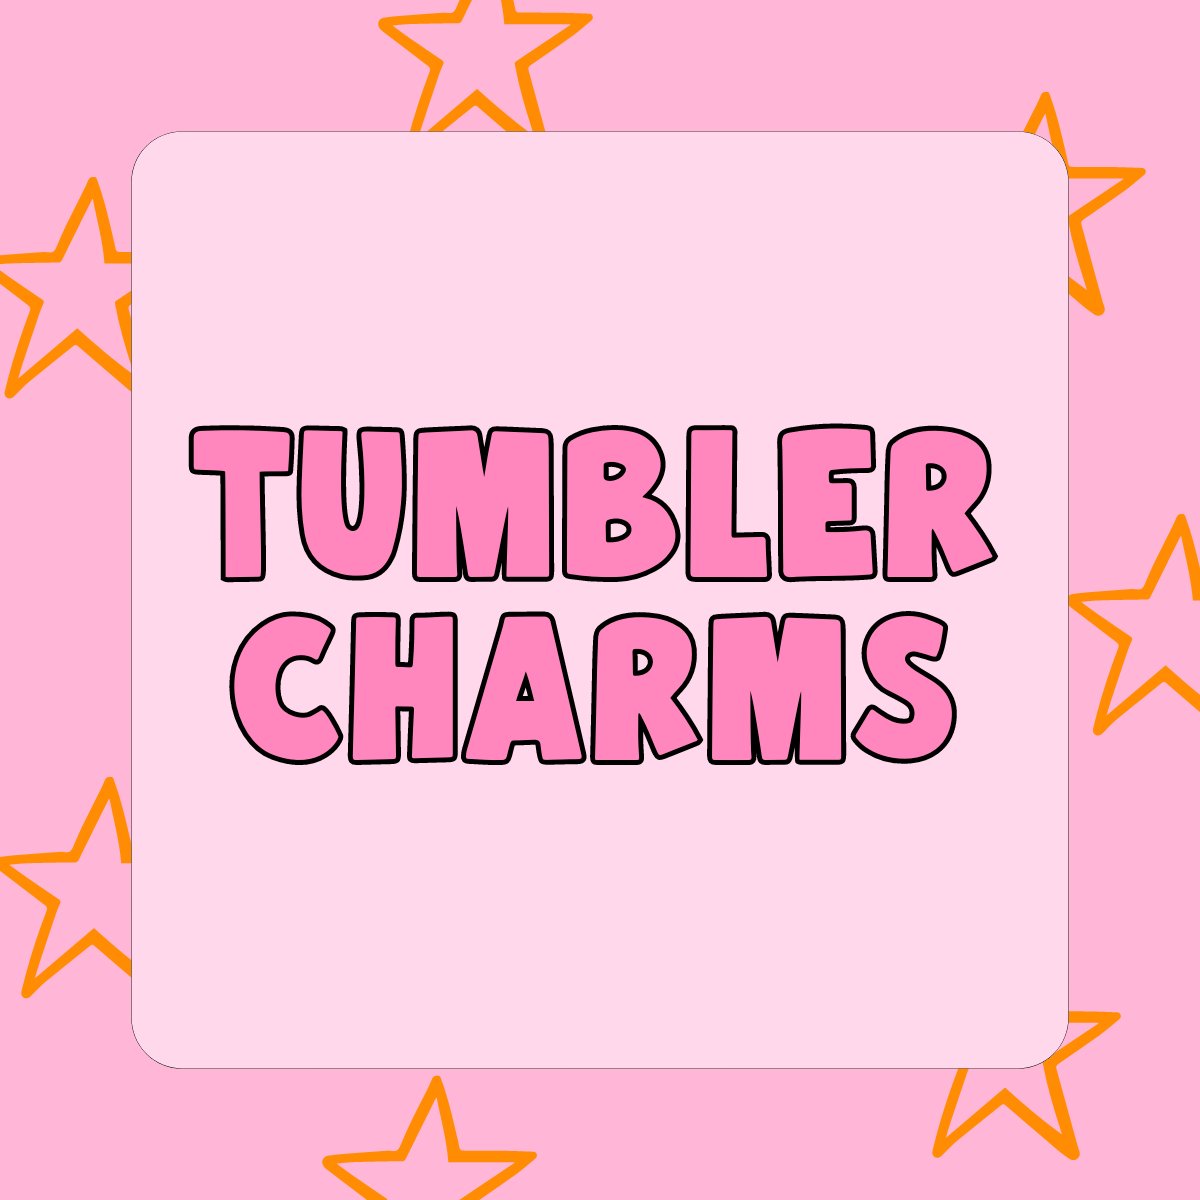 Tumbler charms